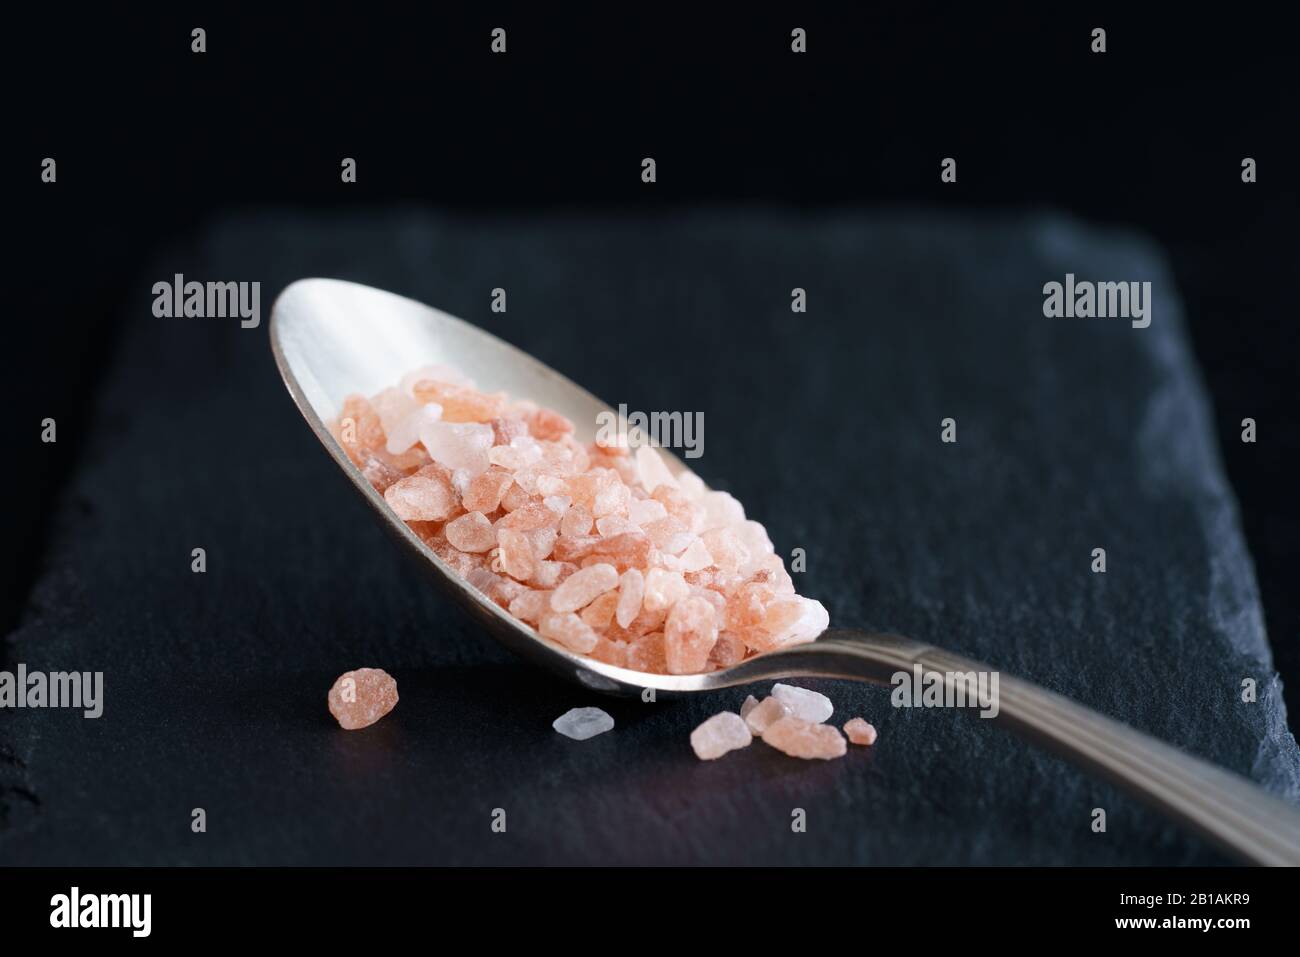 https://c8.alamy.com/comp/2B1AKR9/daily-salt-intake-1-teaspoon-of-pink-himalayan-salt-black-background-high-resolution-hard-light-2B1AKR9.jpg